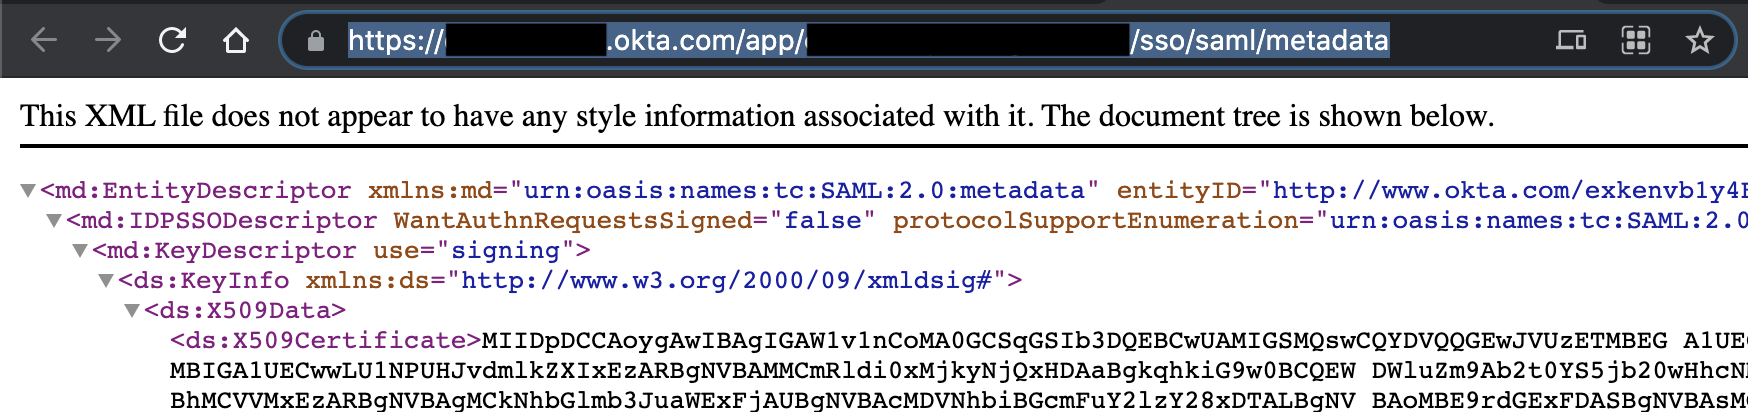 Okta - Identity Metadata URL